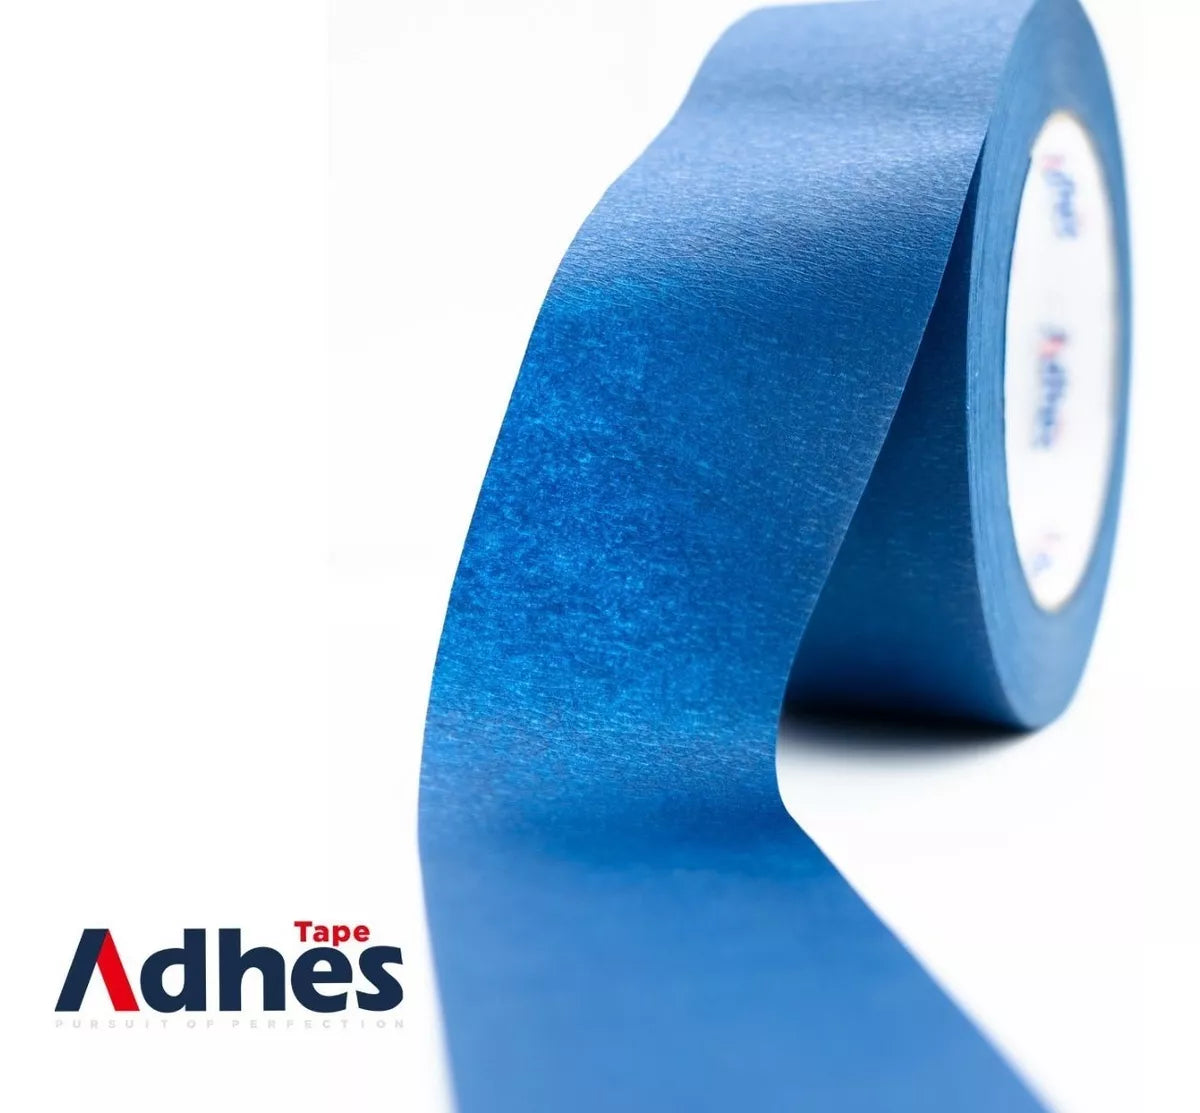 Masking Tape Cinta Enmascarar Azul Anti-uv Adhes 48mm X 50m